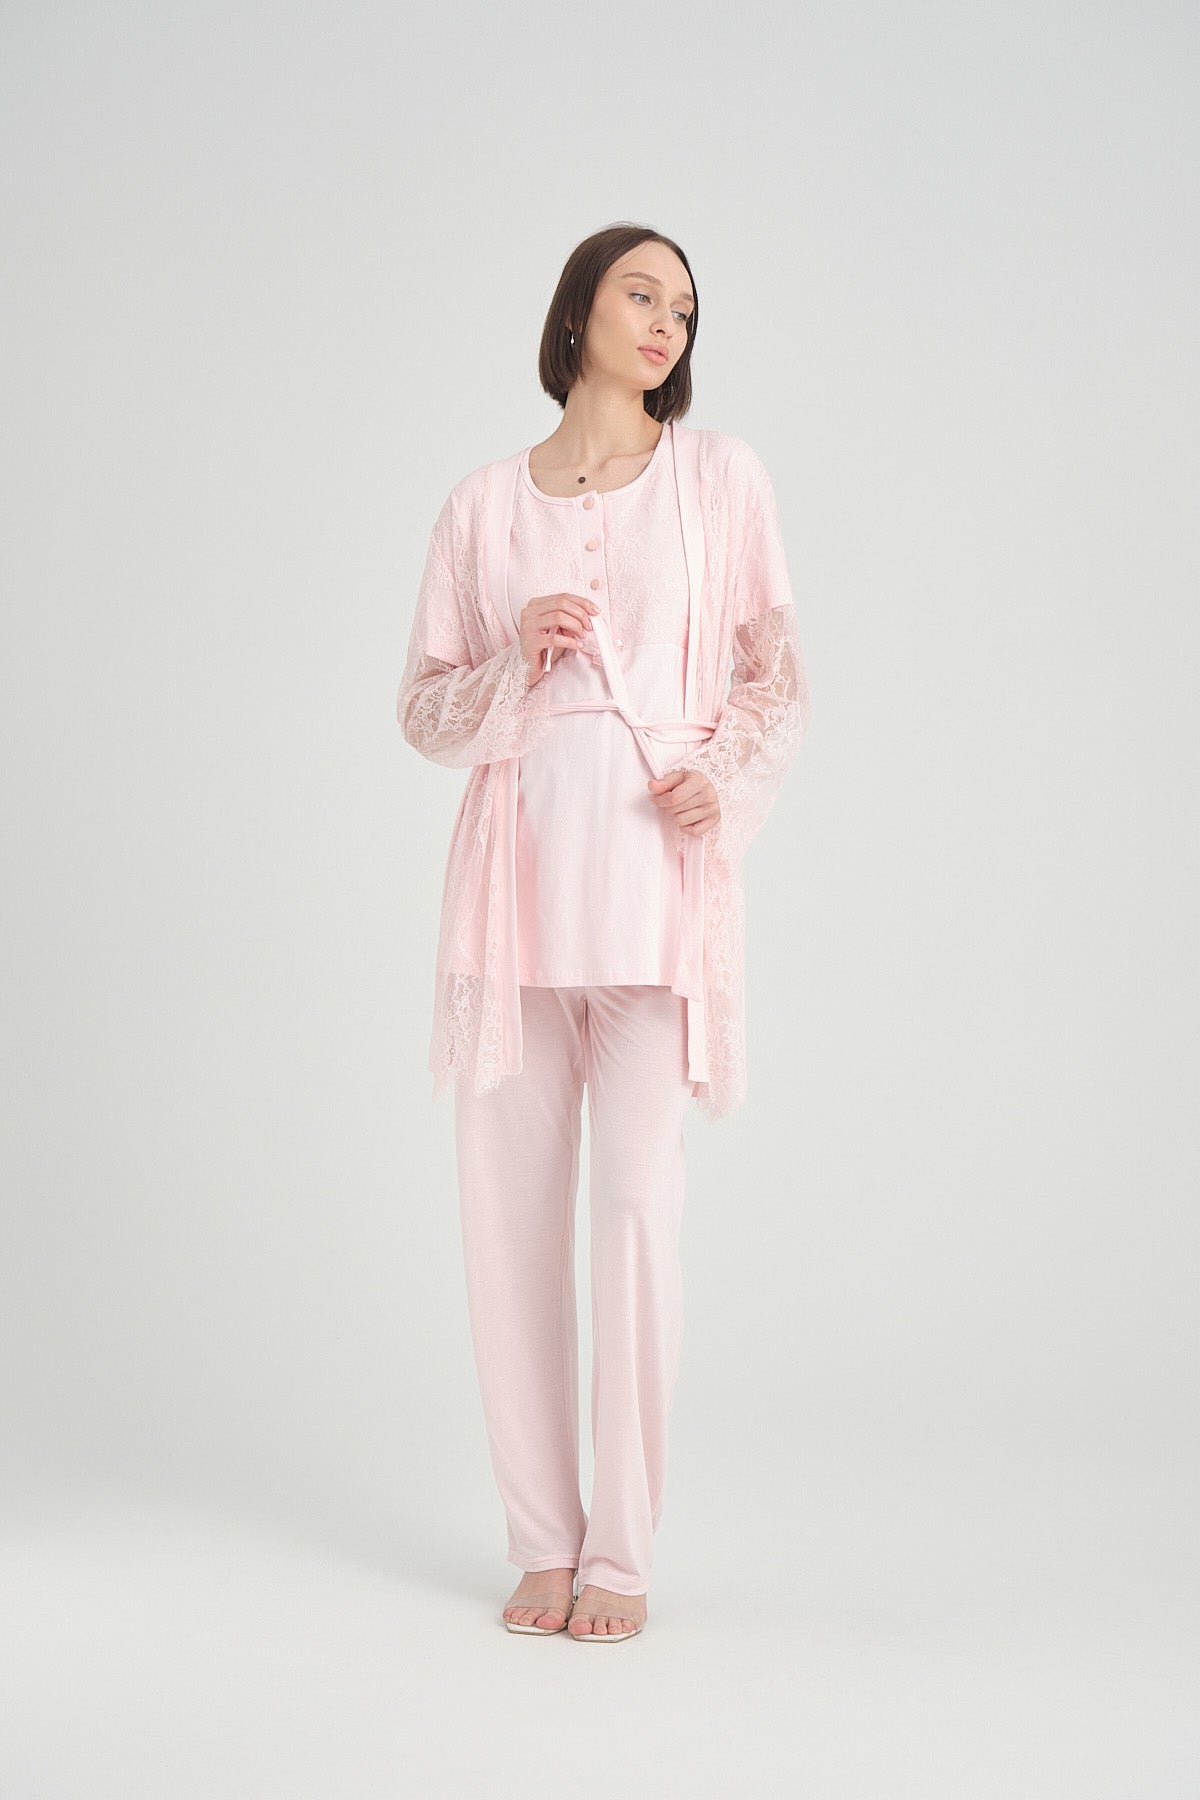 Lace Detailed 3-Pieces Maternity & Nursing Pajamas With Robe Pink - 2370